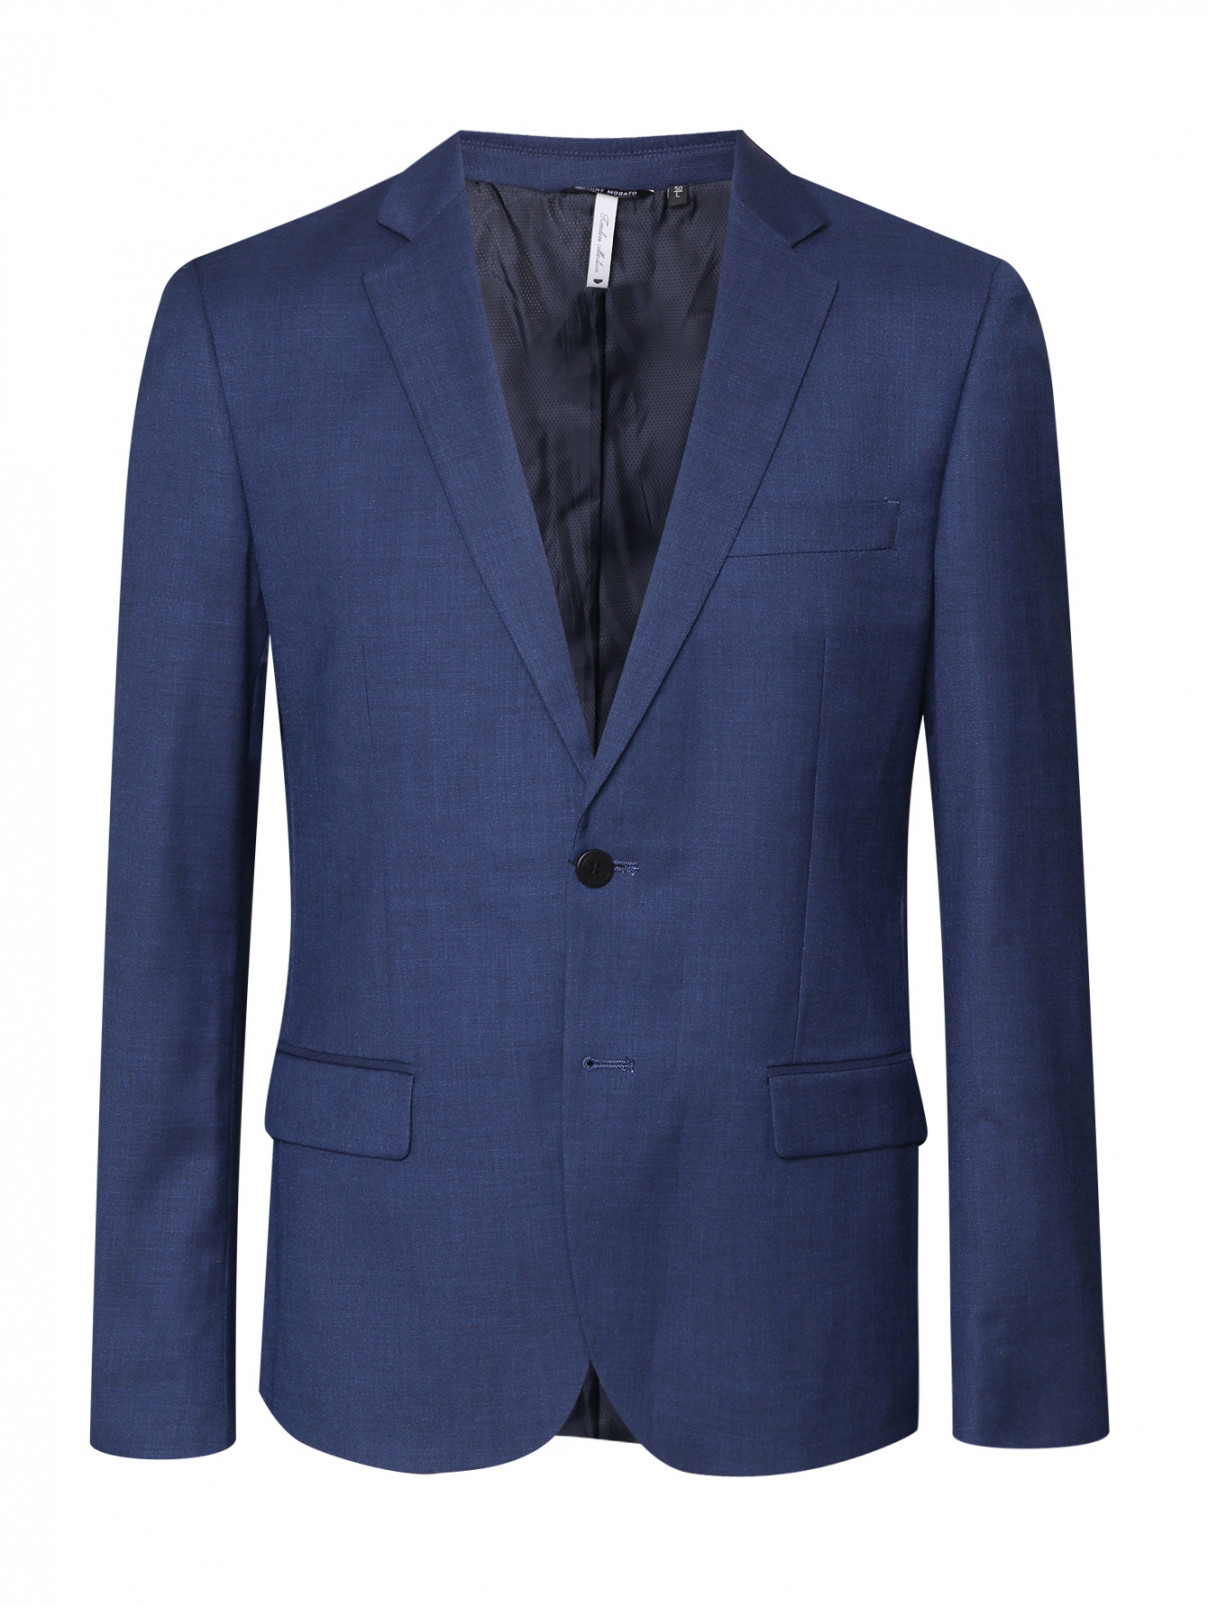 Однотонный пиджак на пуговицах Antony Morato  –  Общий вид  – Цвет:  Синий